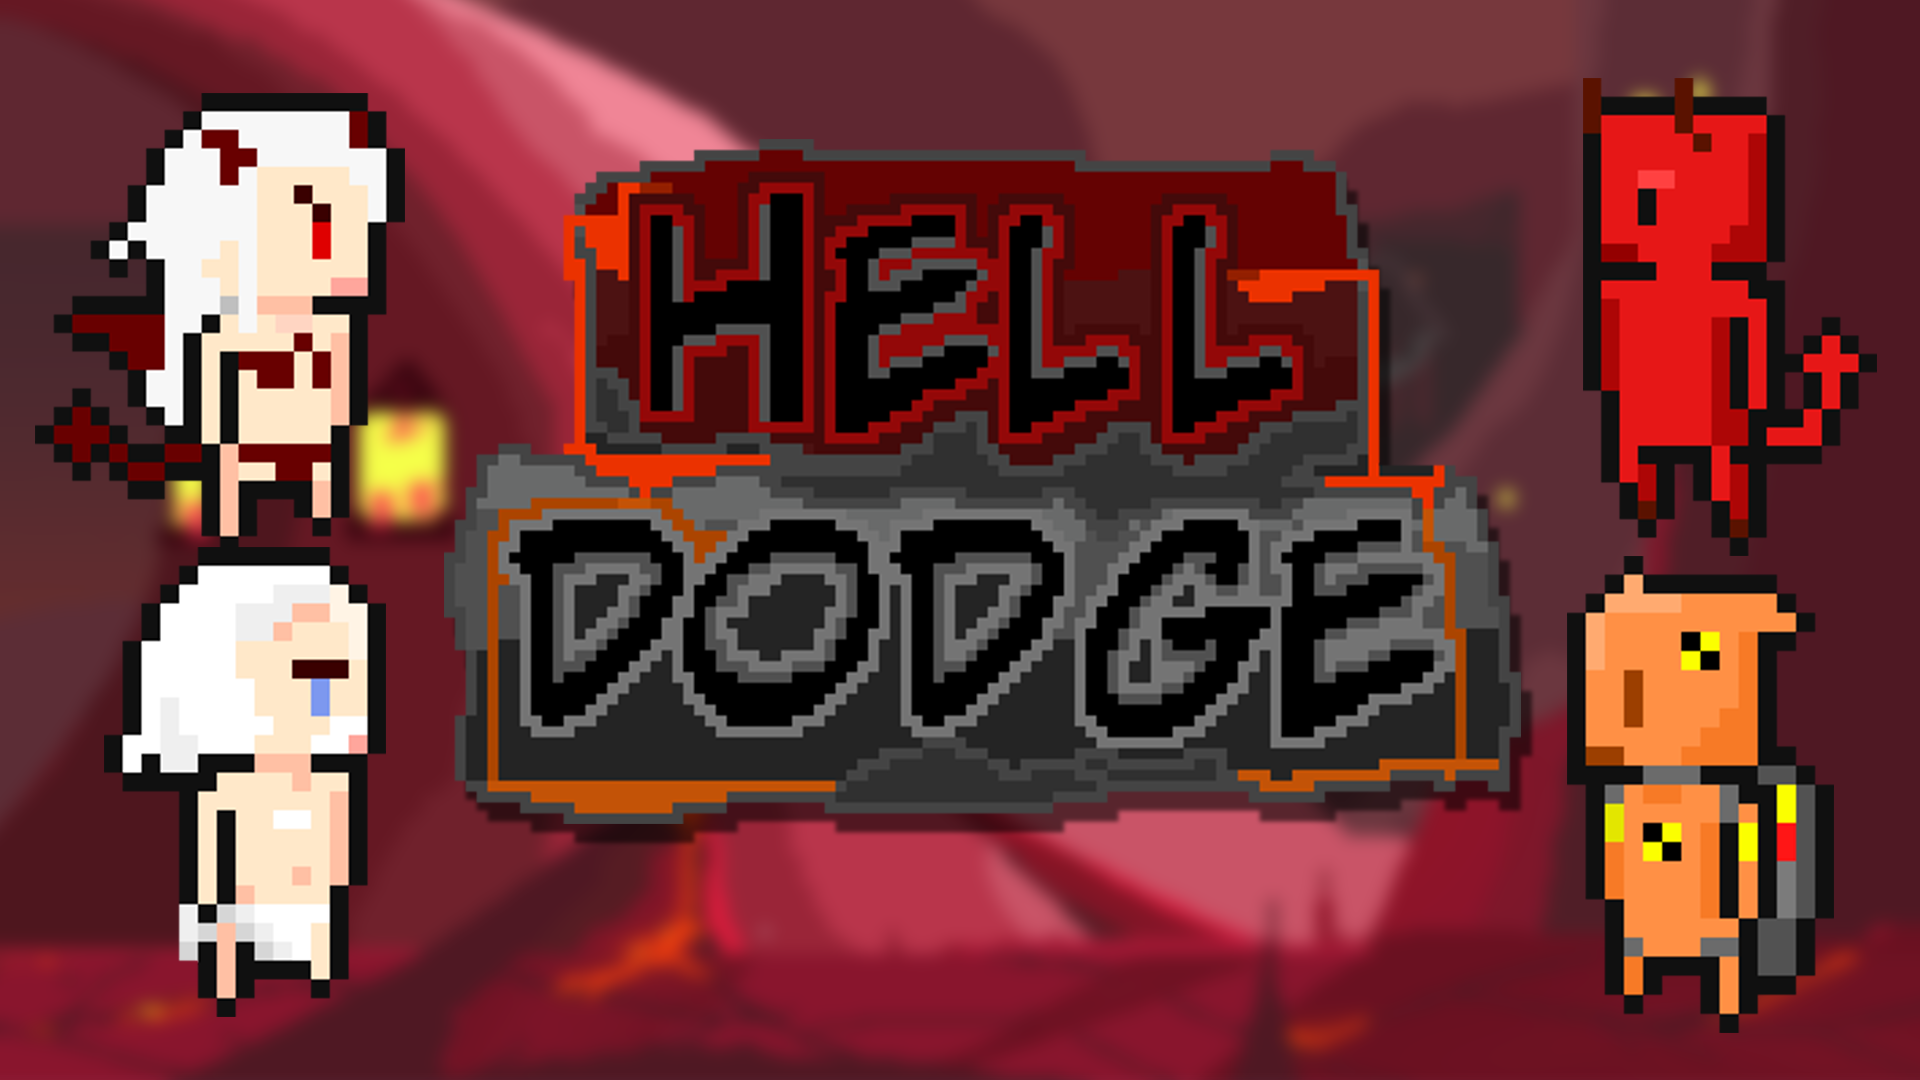 Hell Dodge